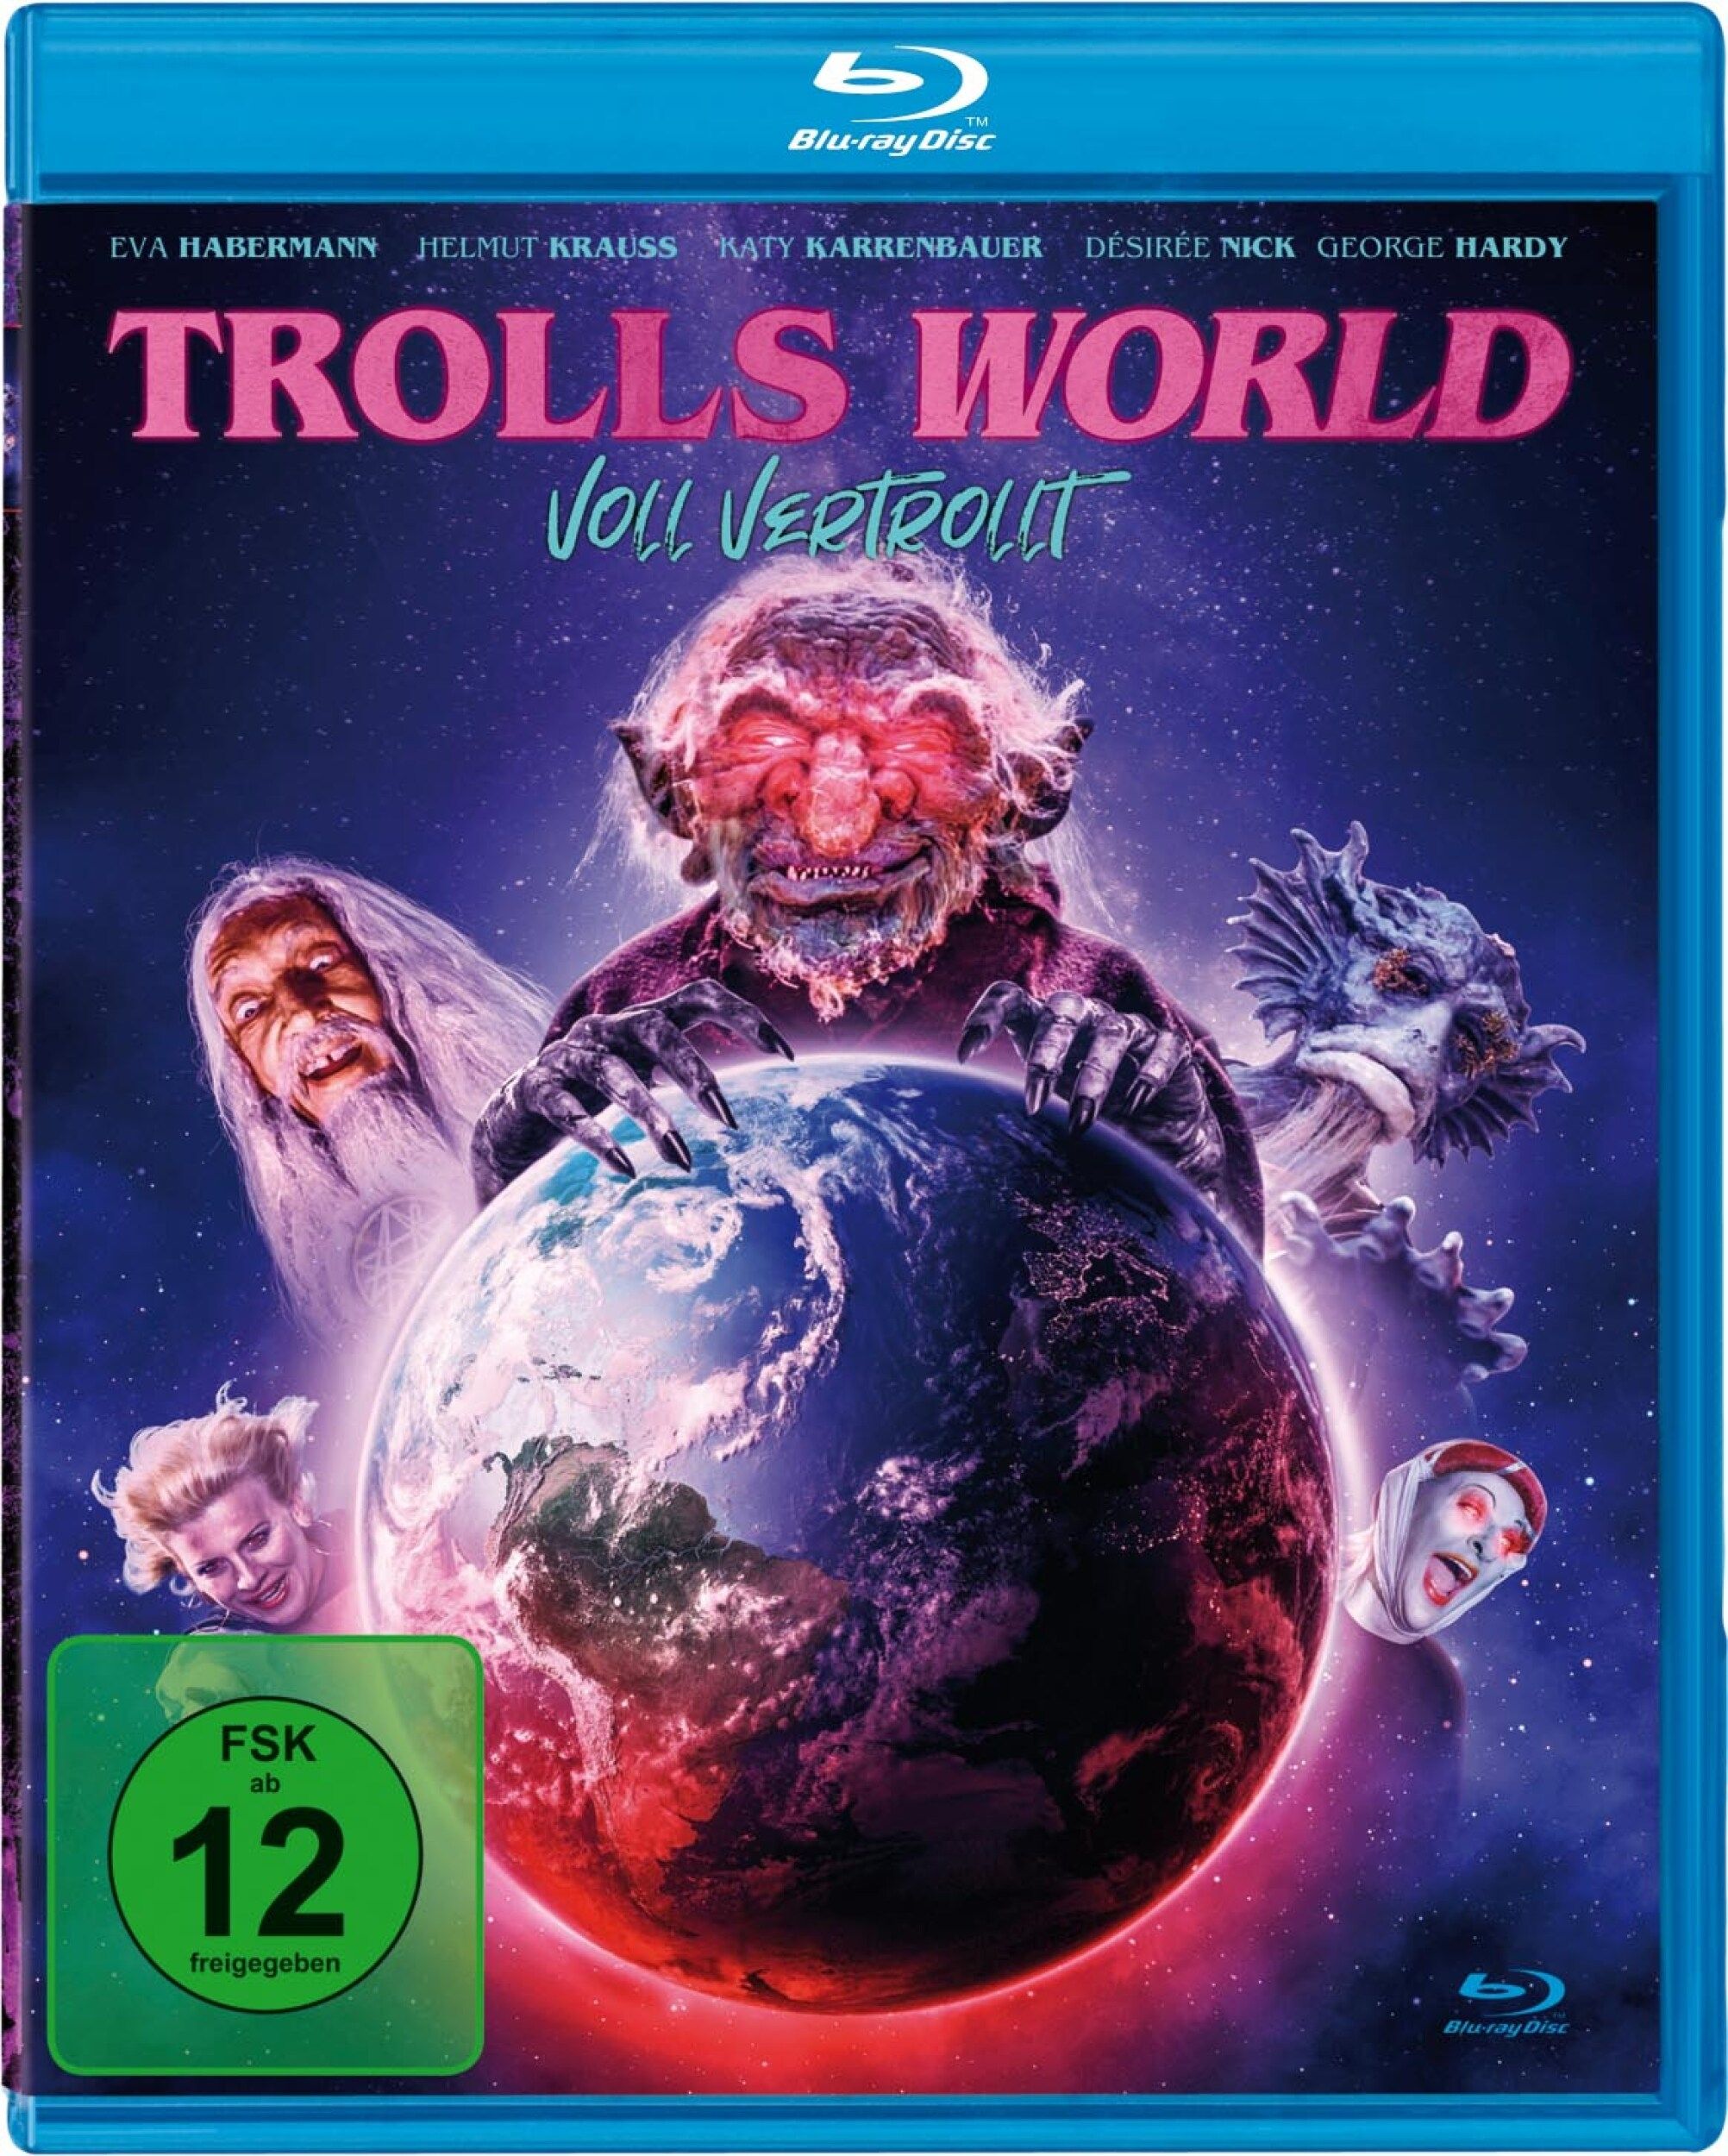 Trolls World - Voll Vertrollt (BLURAY)